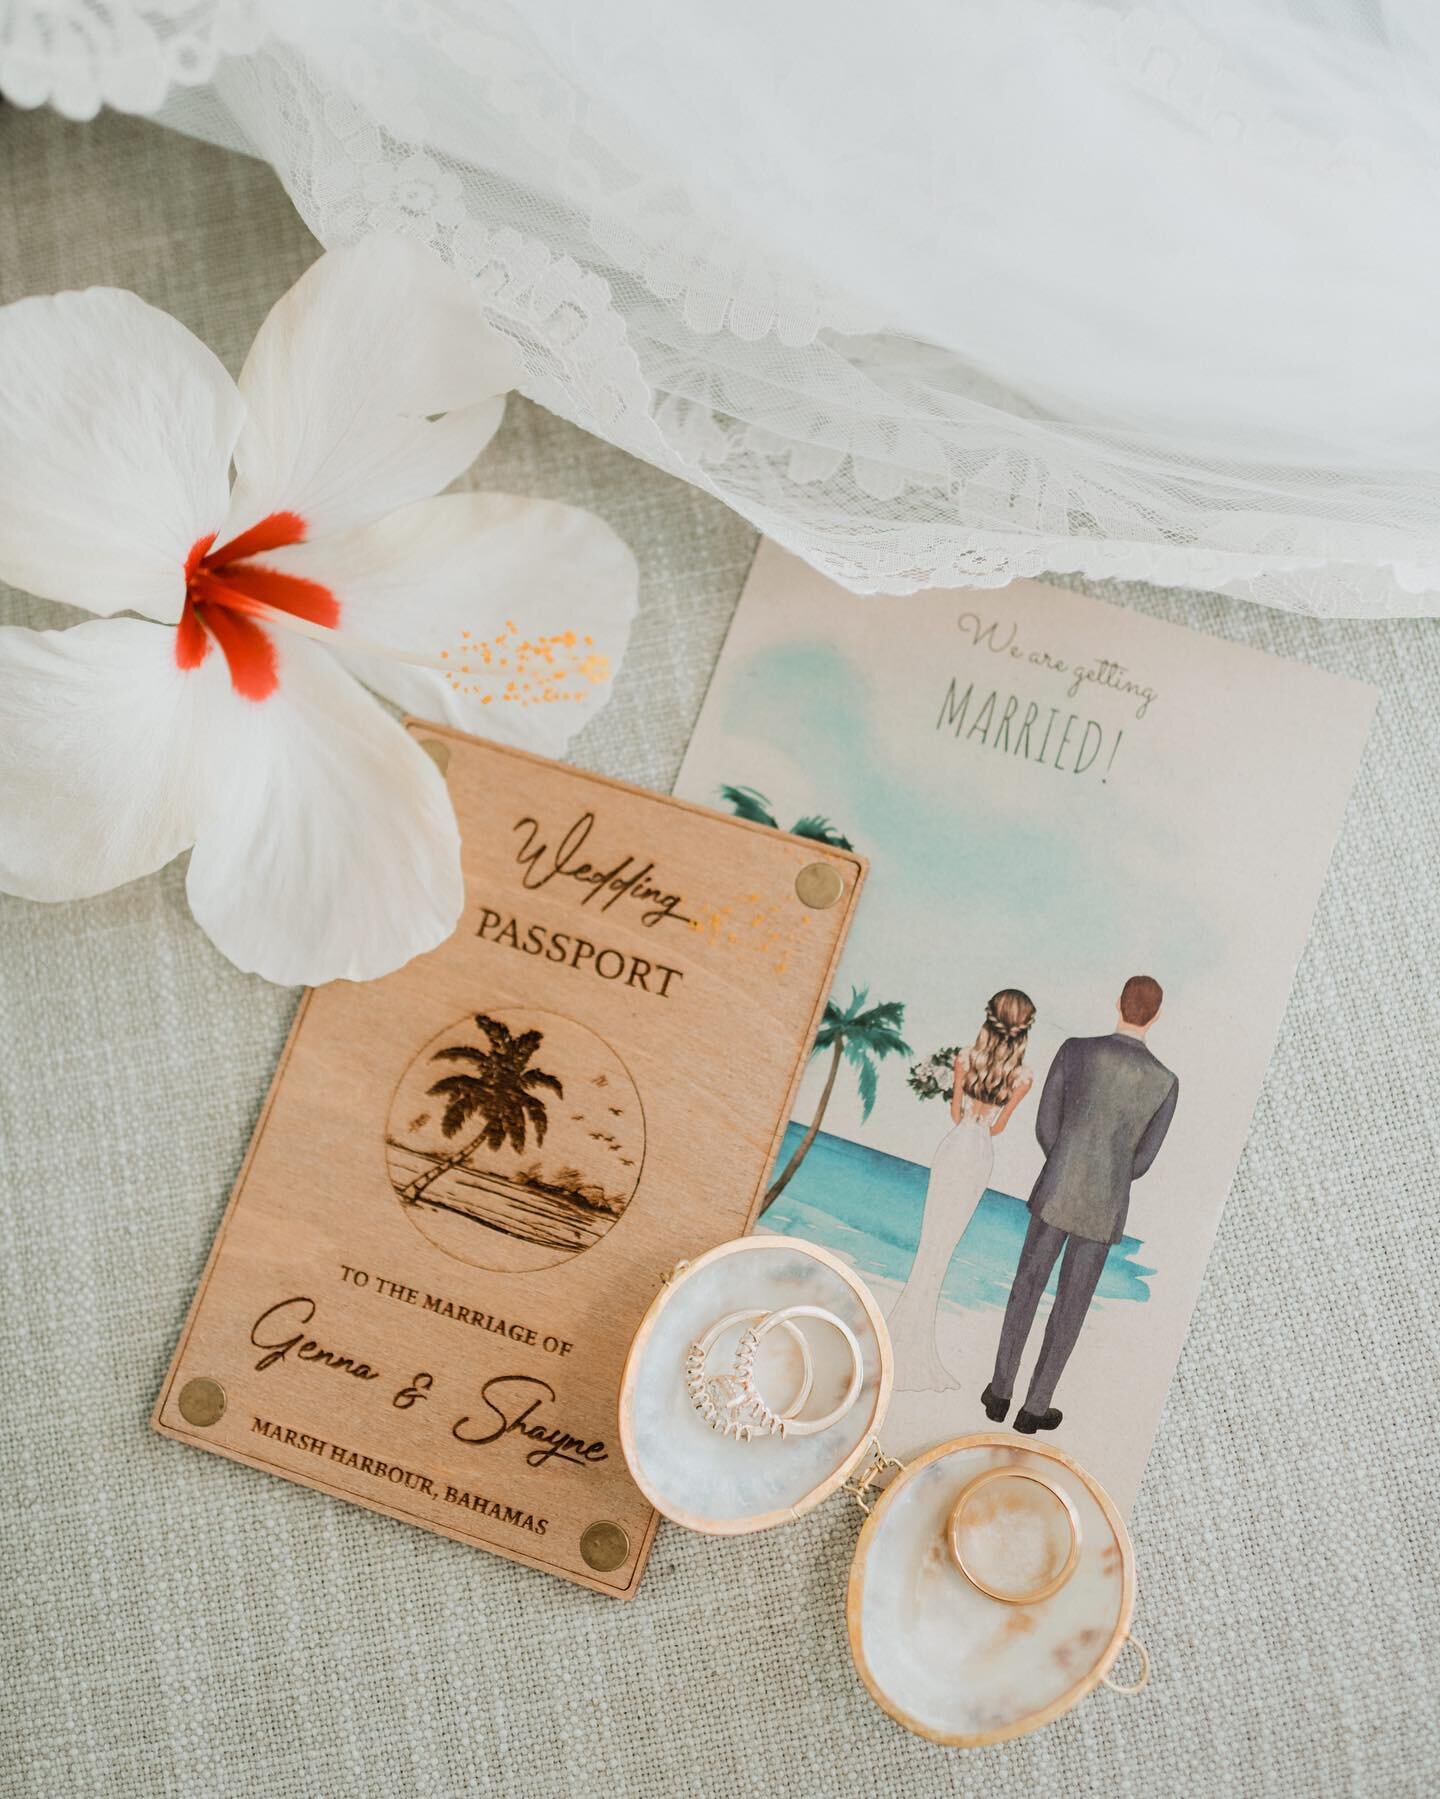 Cute wedding details! // #weddingpassport #weddingannouncement #weddingrings